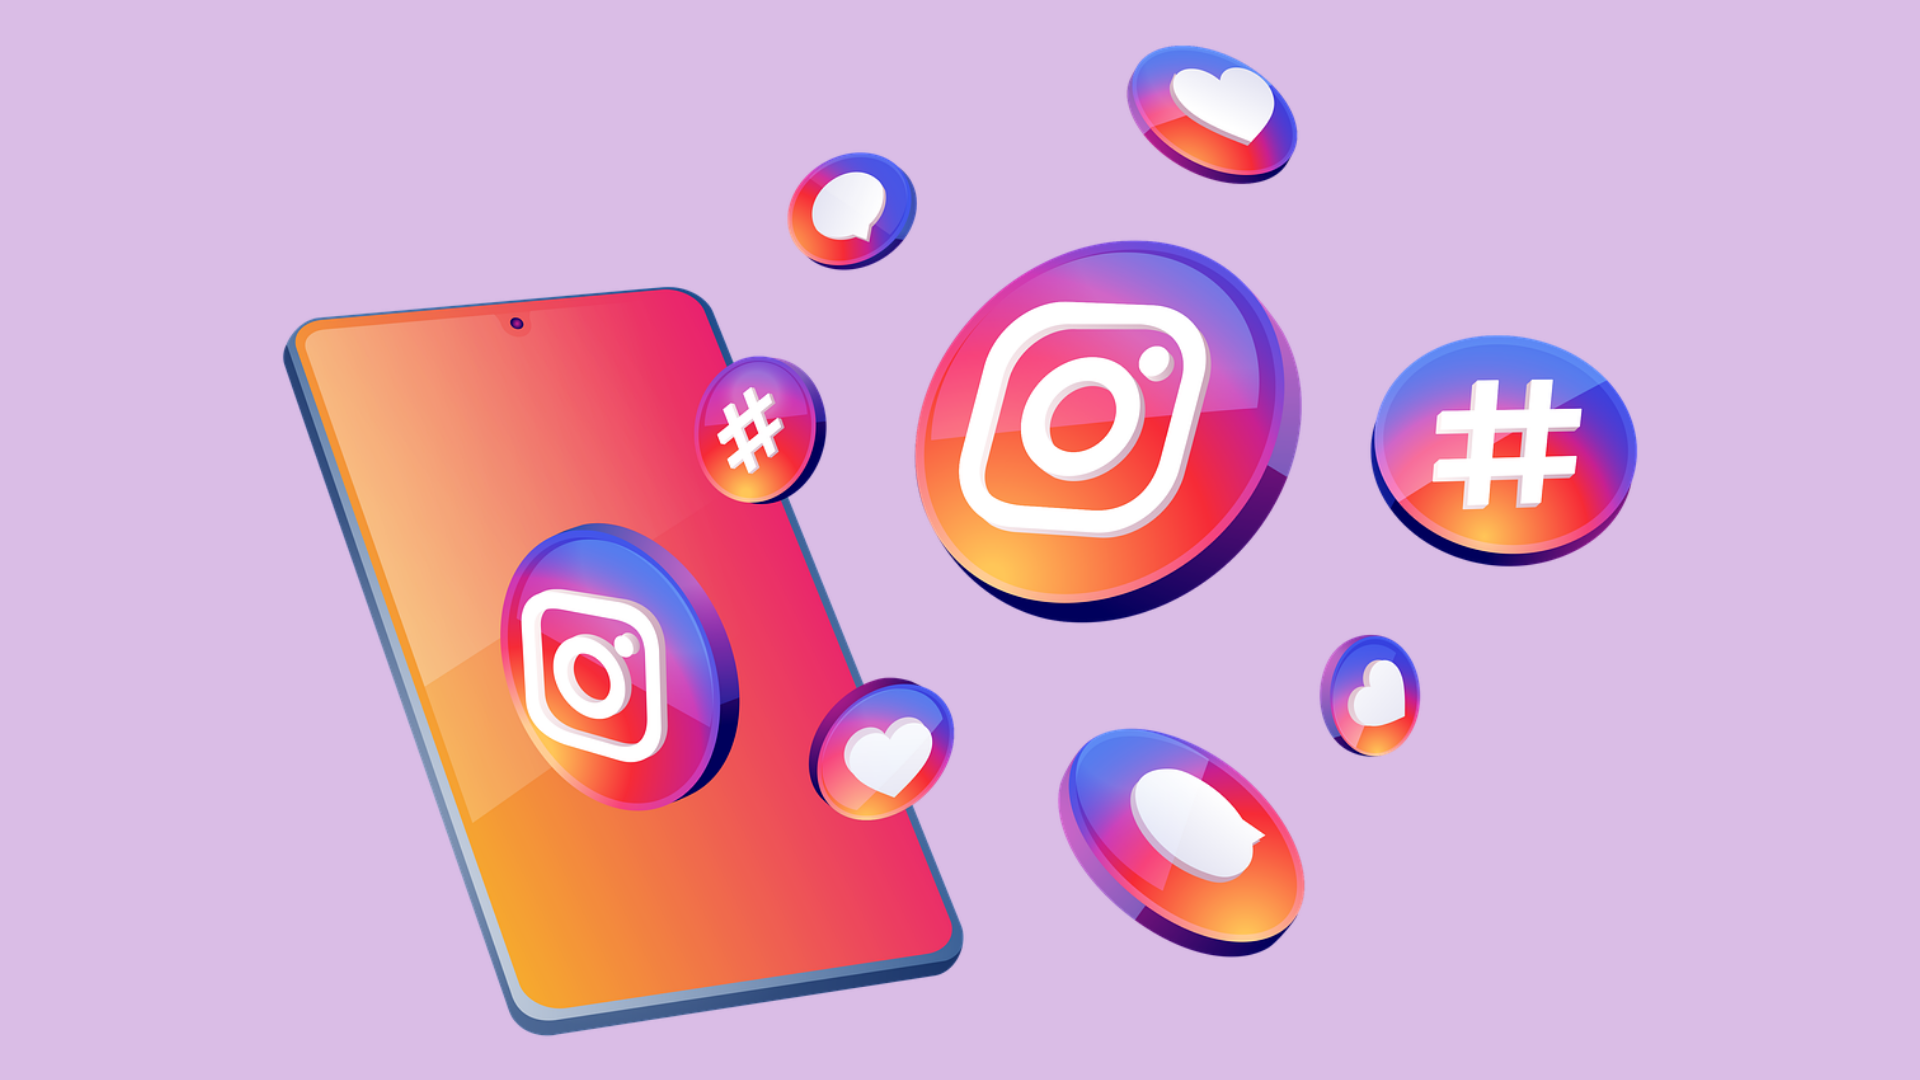 Instagram Logo Insta - Free GIF on Pixabay - Pixabay